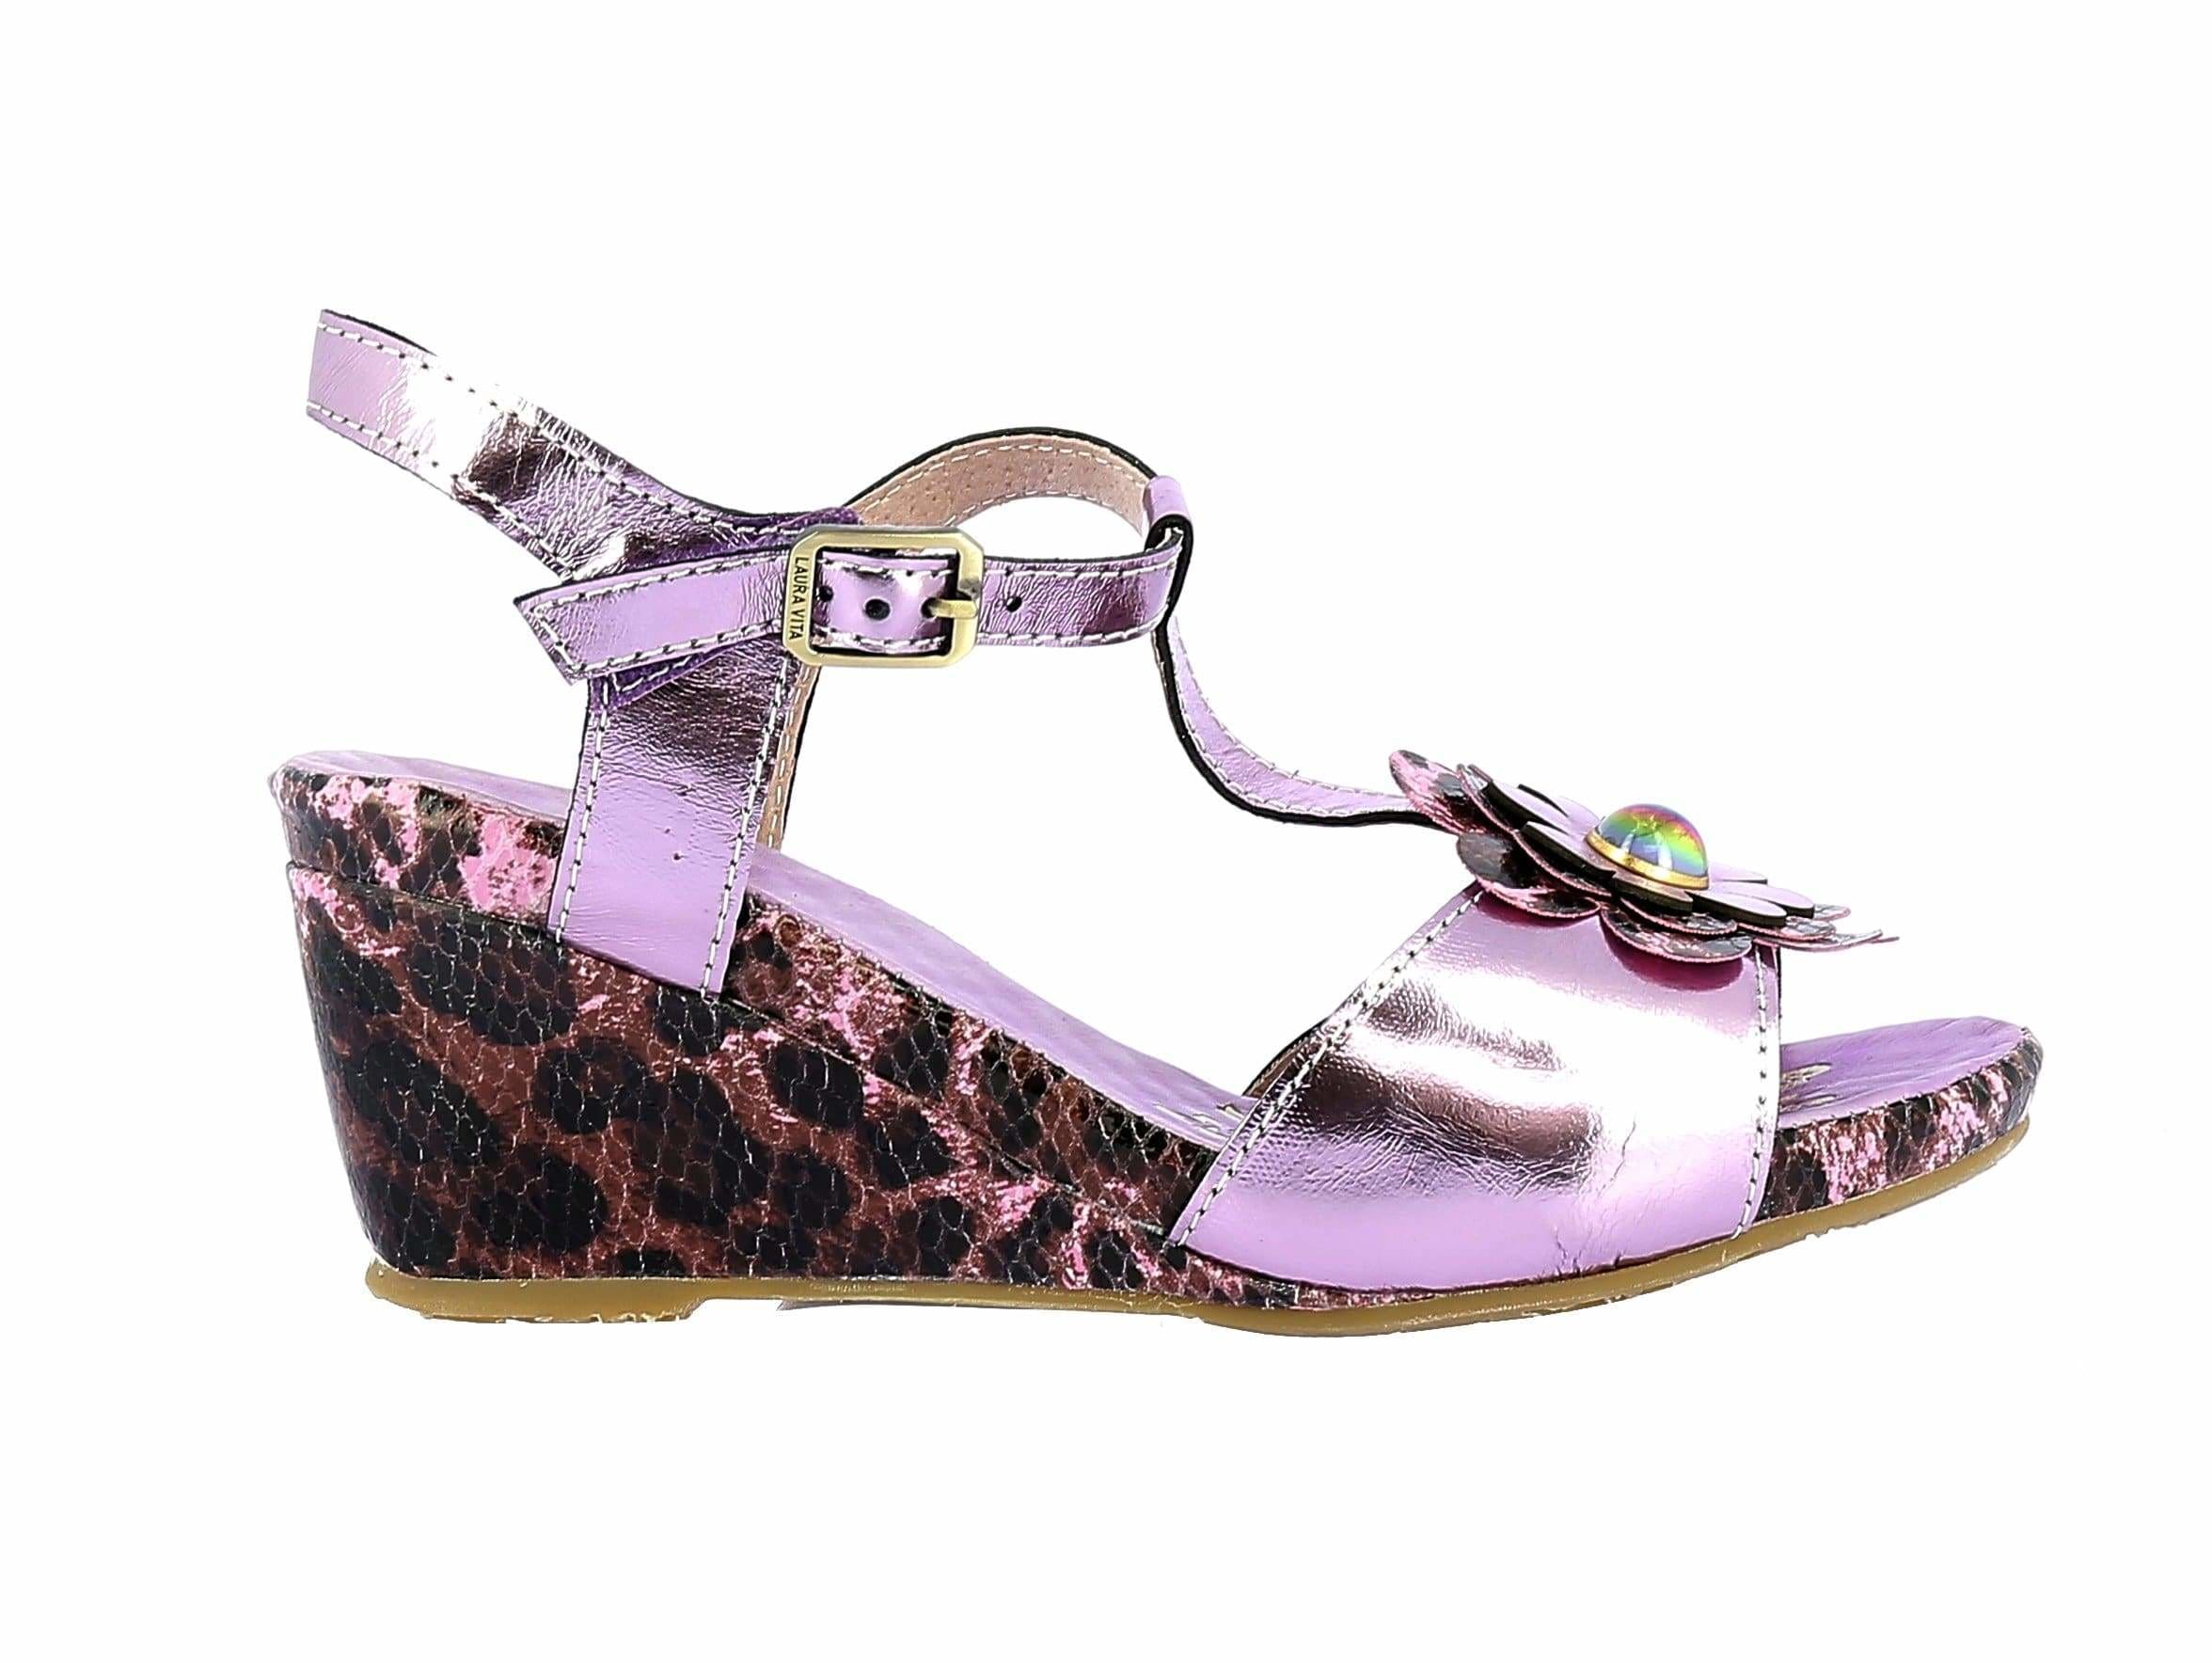 Schuhe BECNOITO 03 - 35 / PURPLE - Sandale